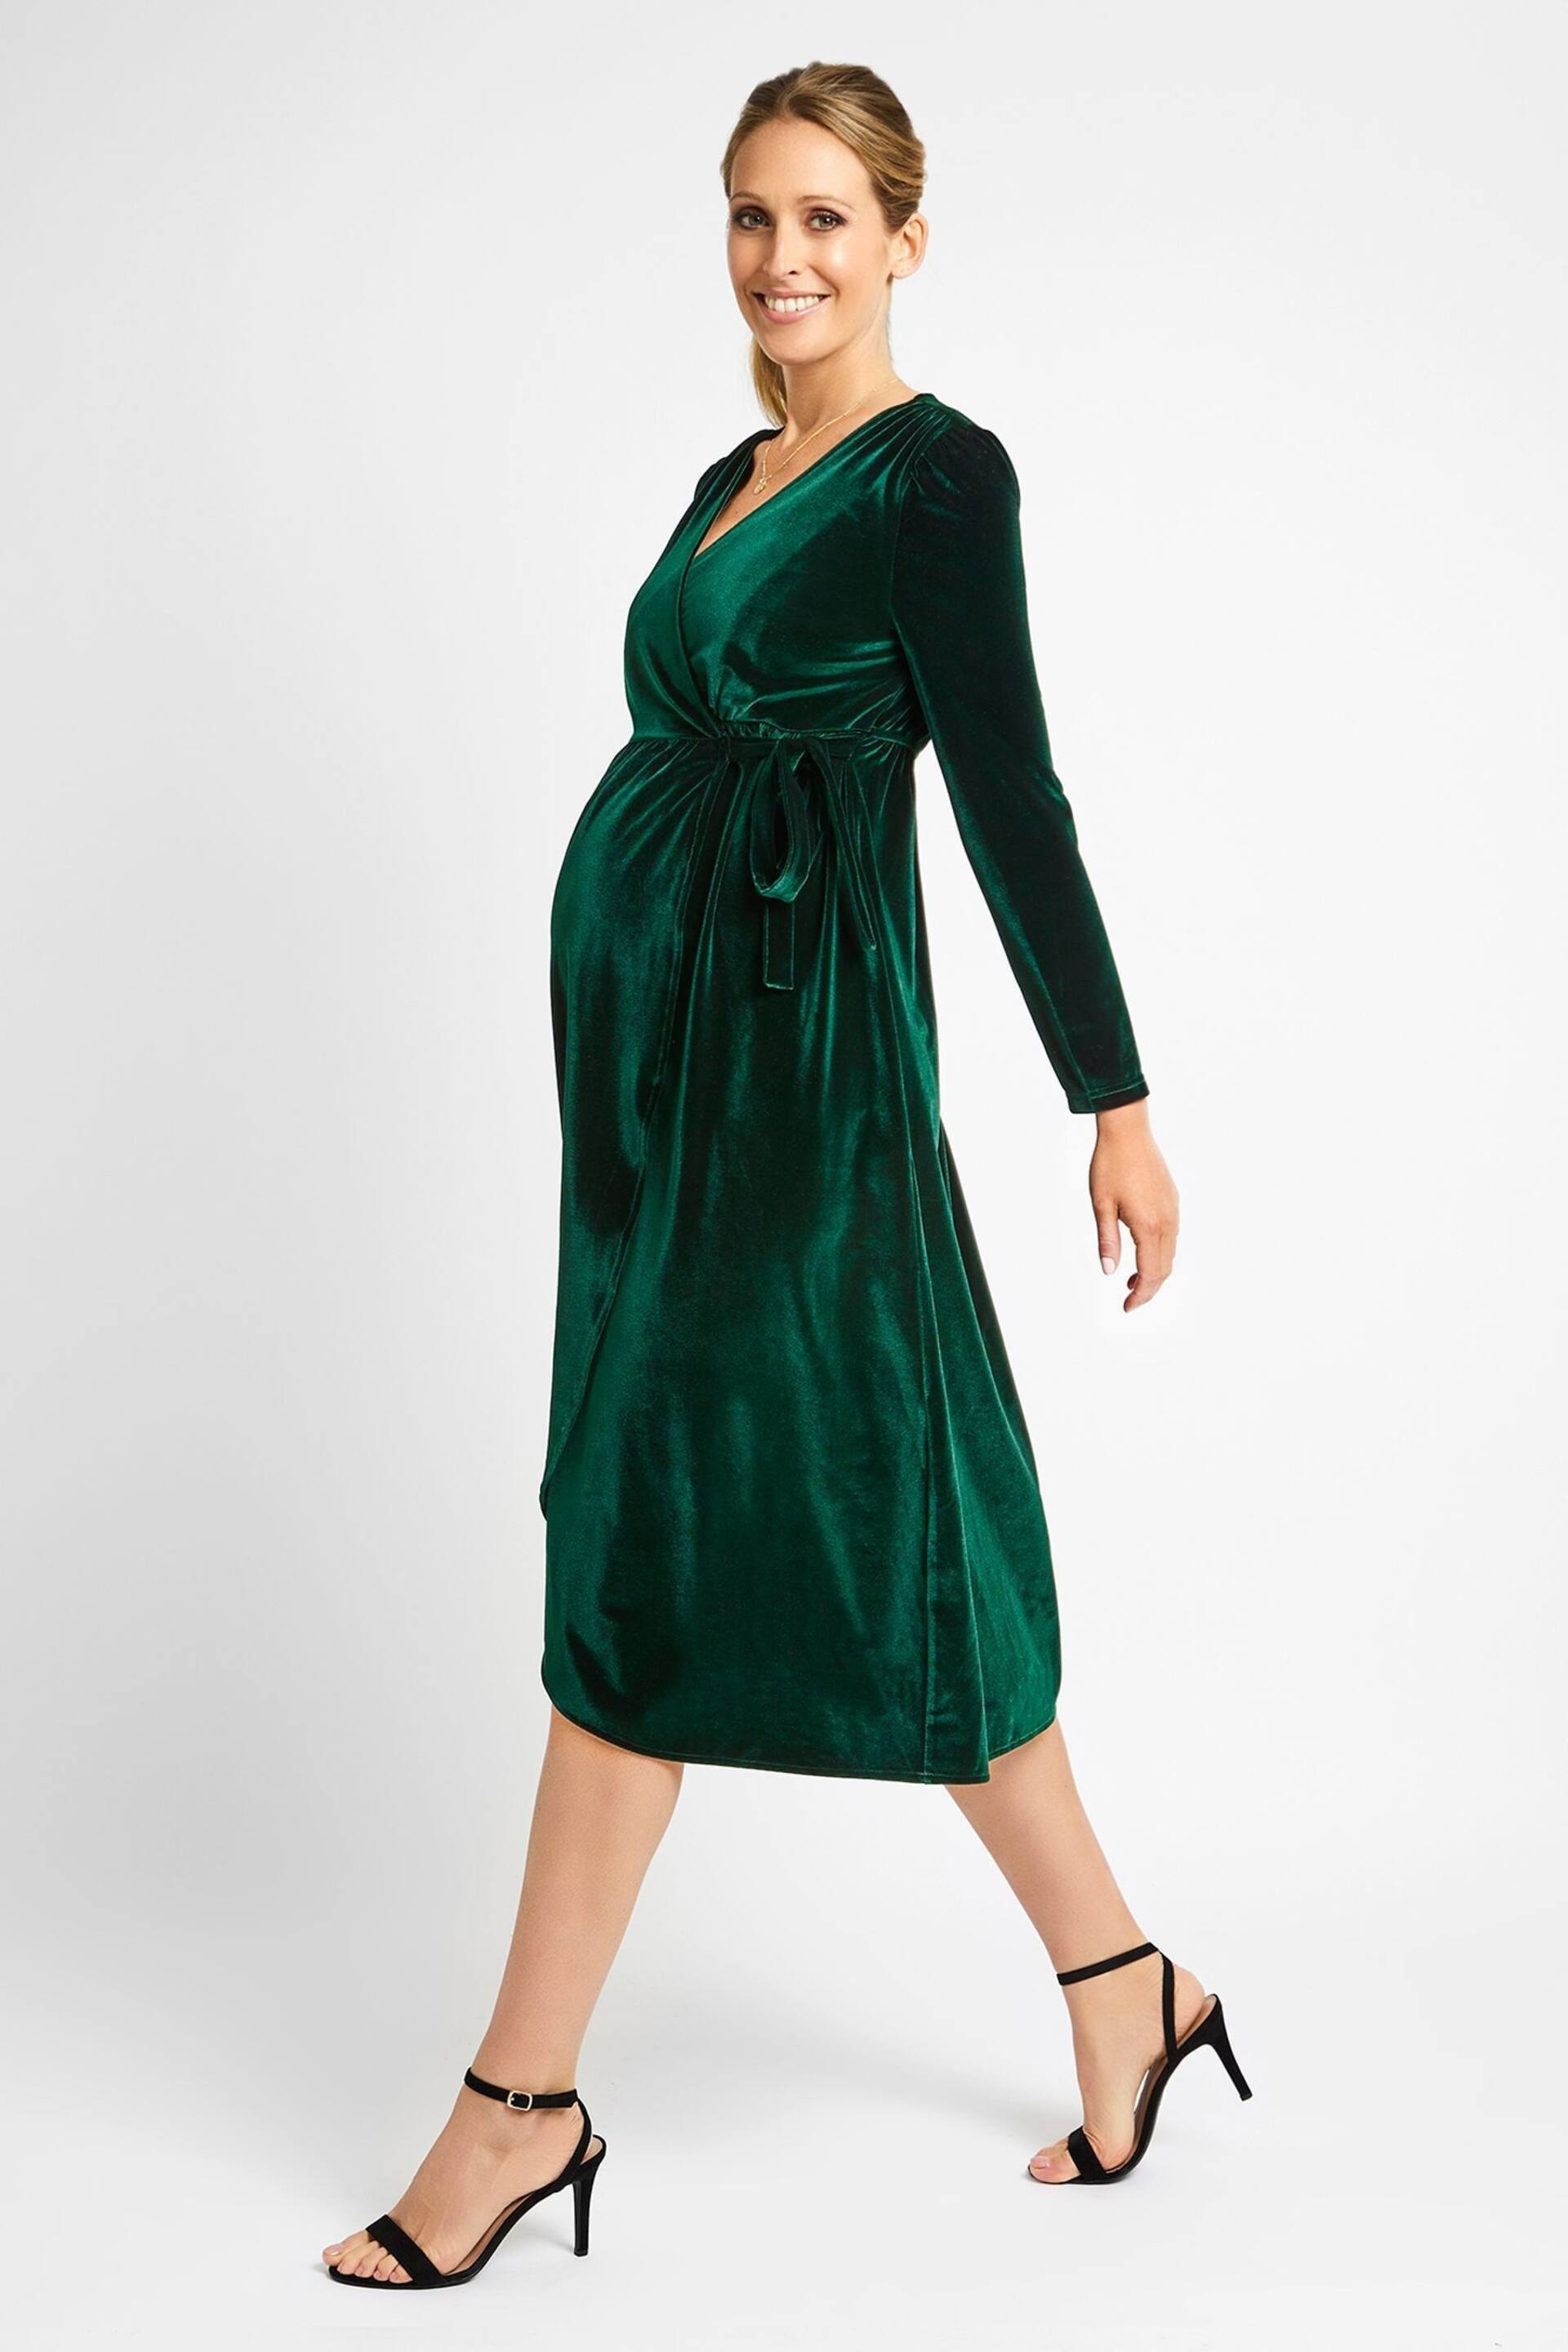 JoJo Maman Bébé Green Velvet Maternity & Nursing Wrap Dress - Image 4 of 7